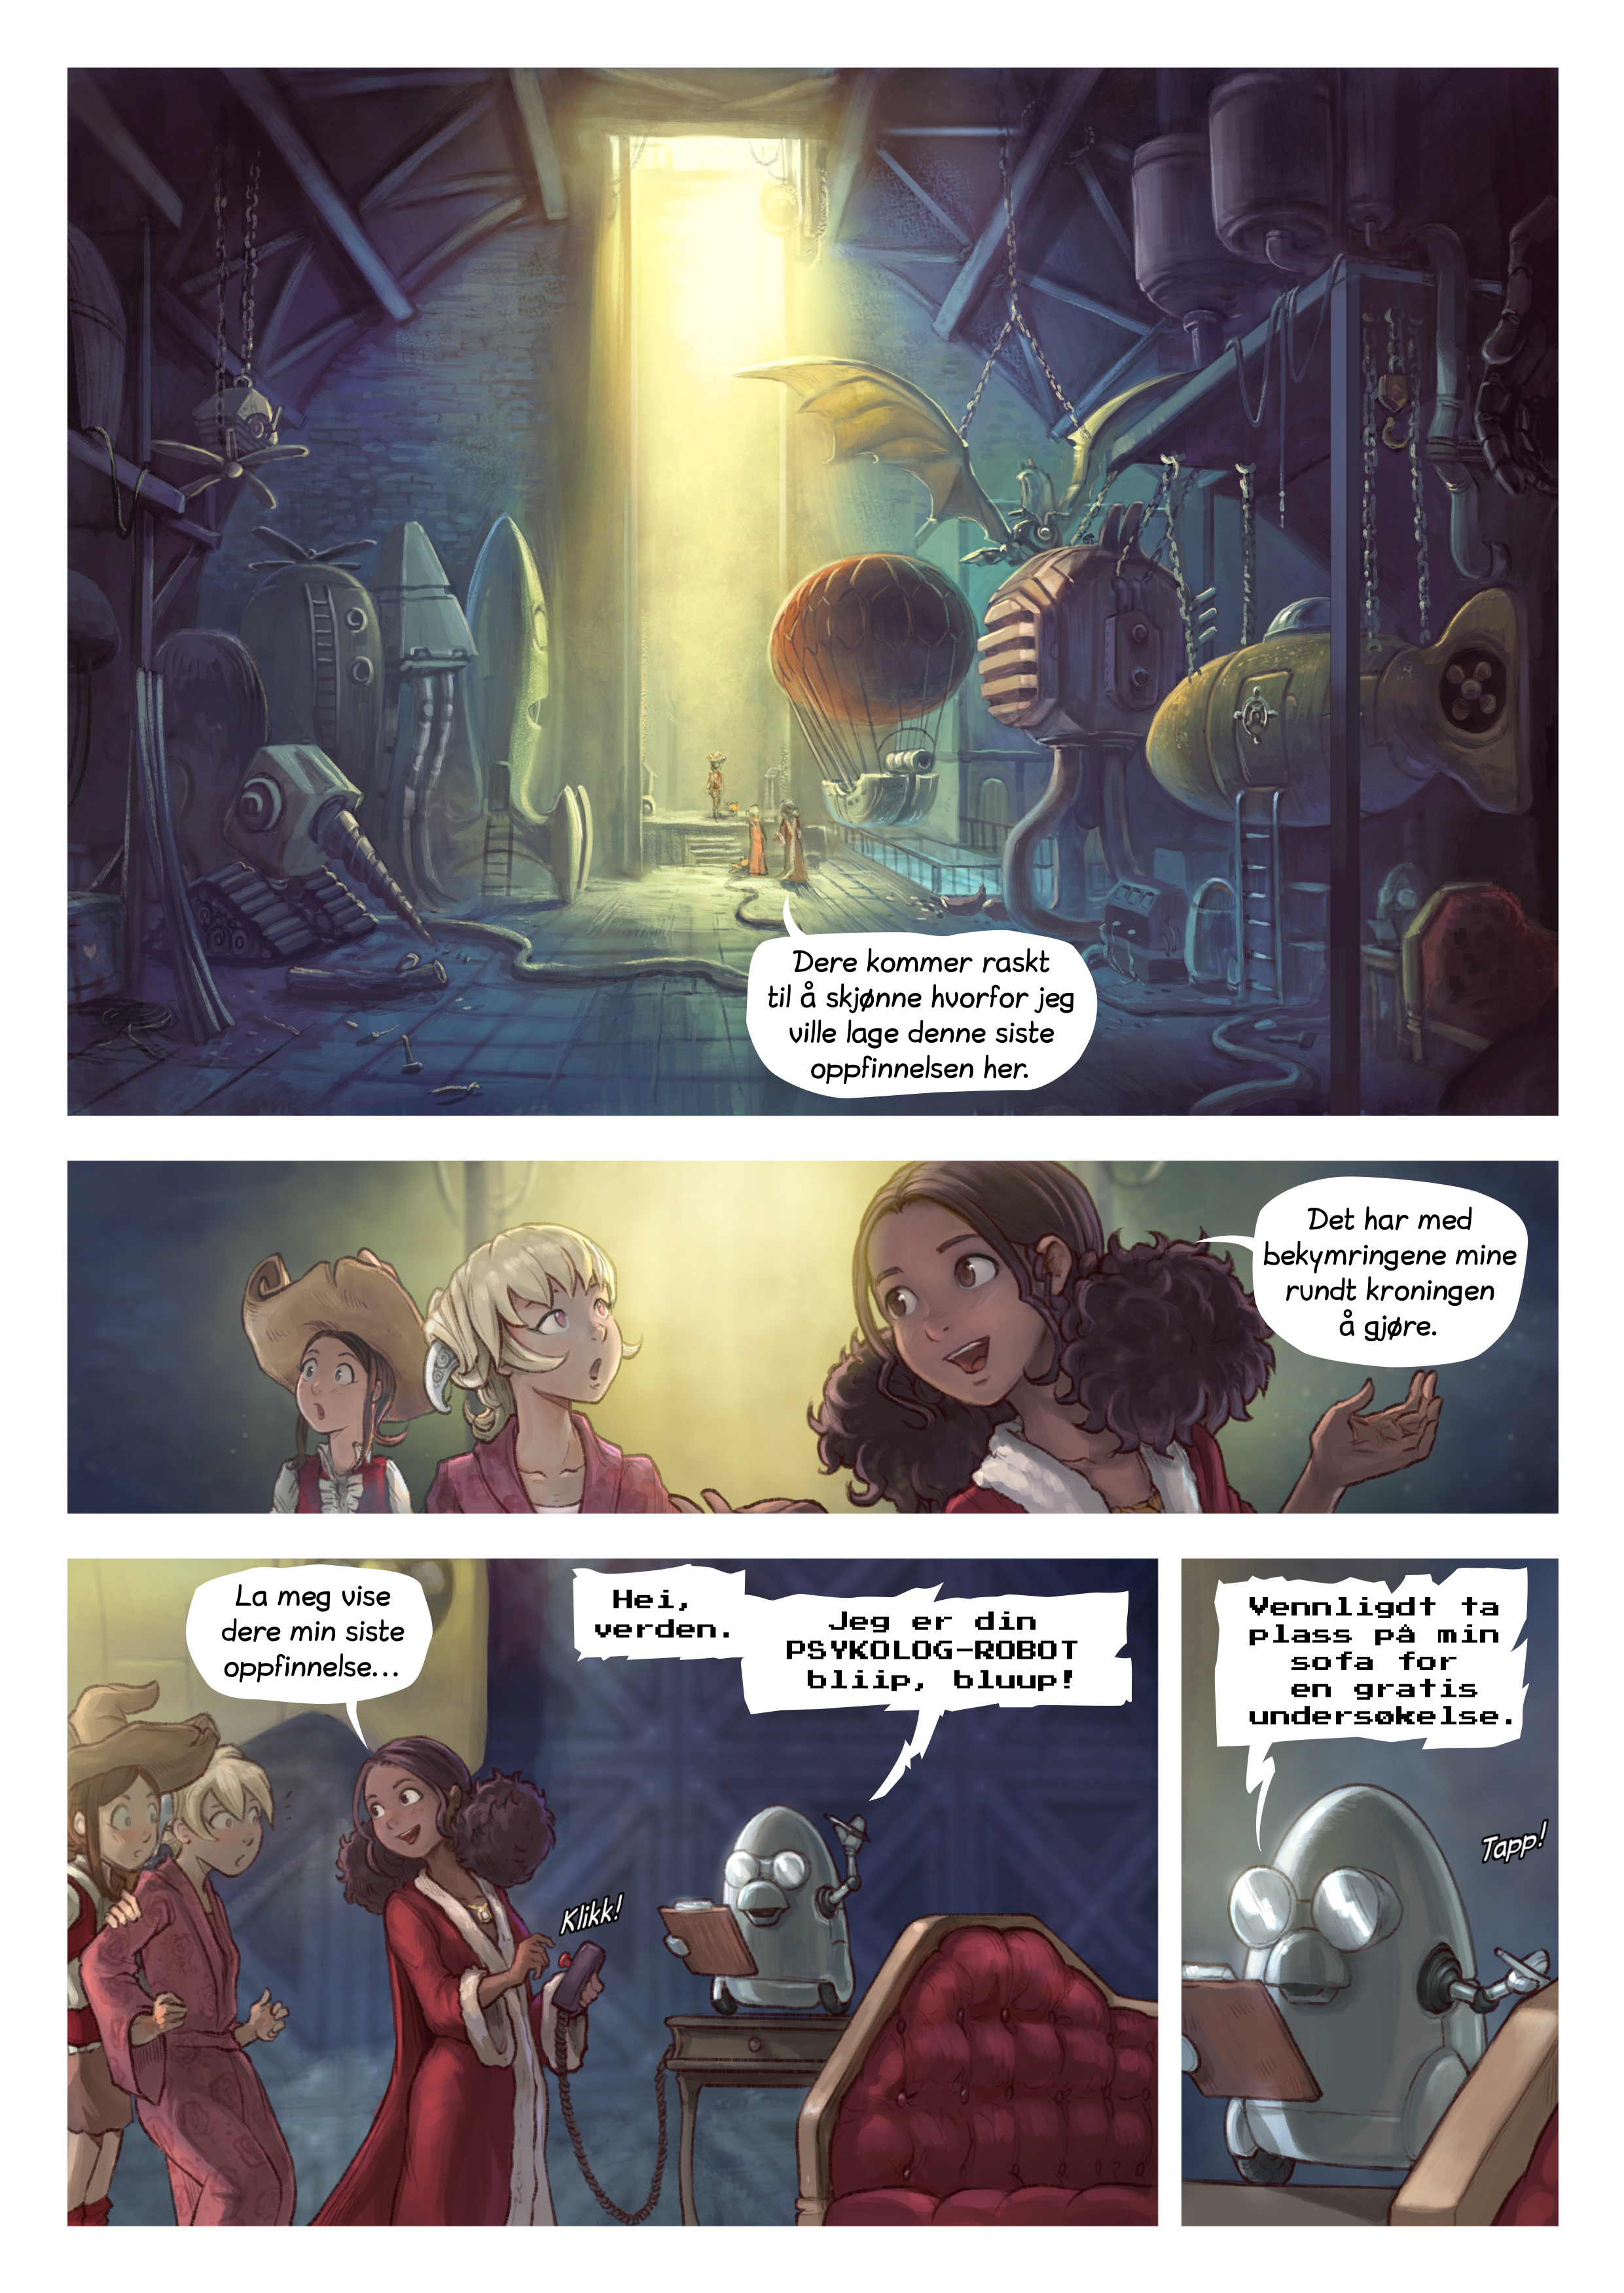 Episode 27: Korianders oppfinnelse, Page 3